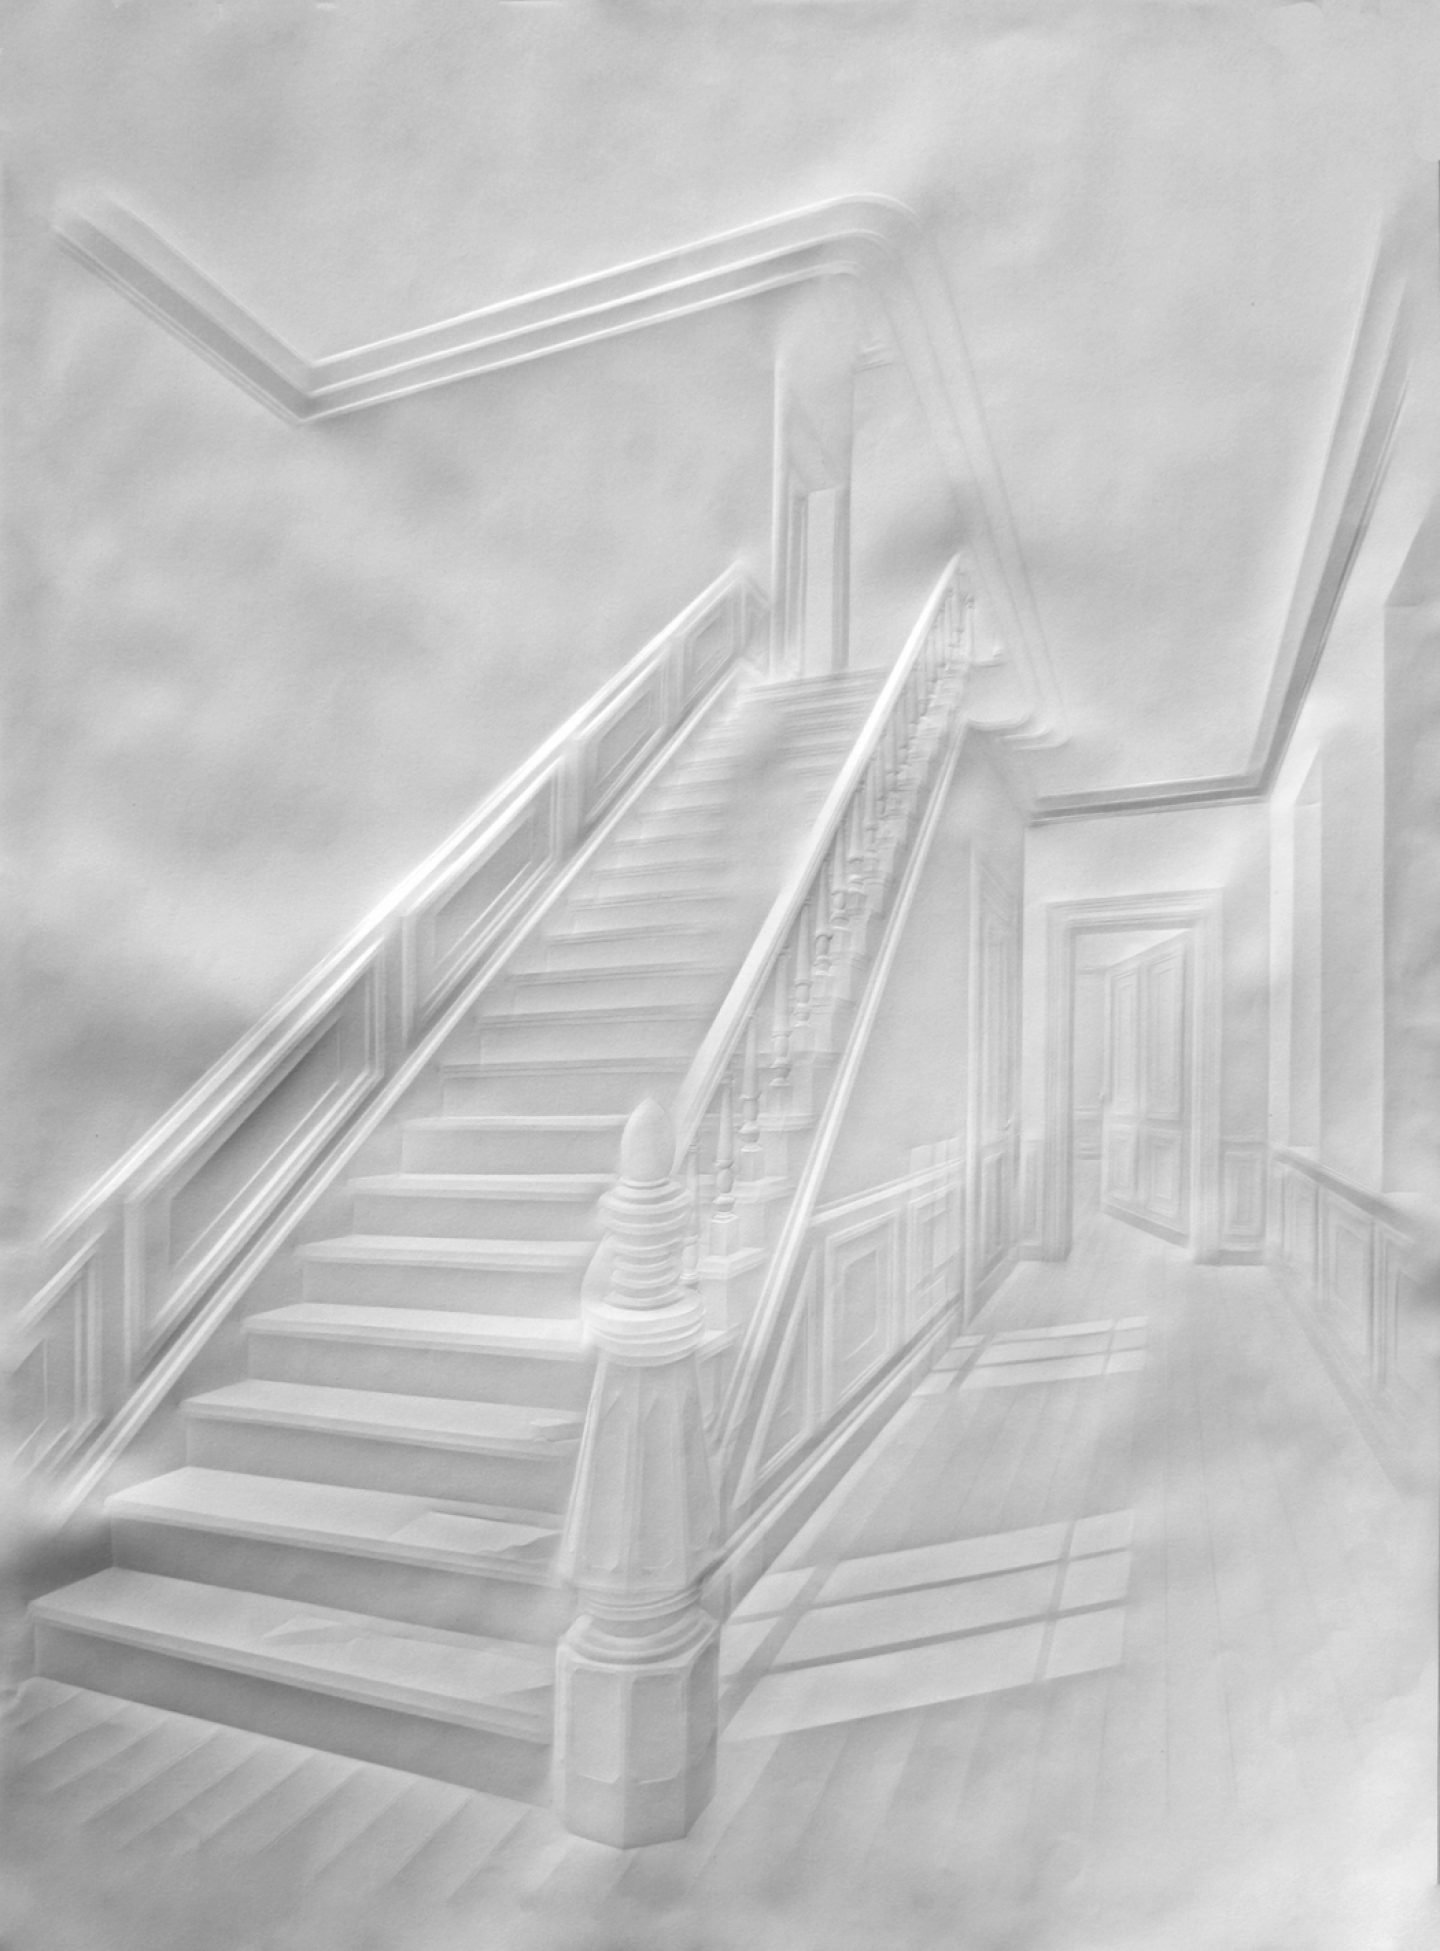 simonschubert(stairs with figure), 2015, 100cm x 70cm